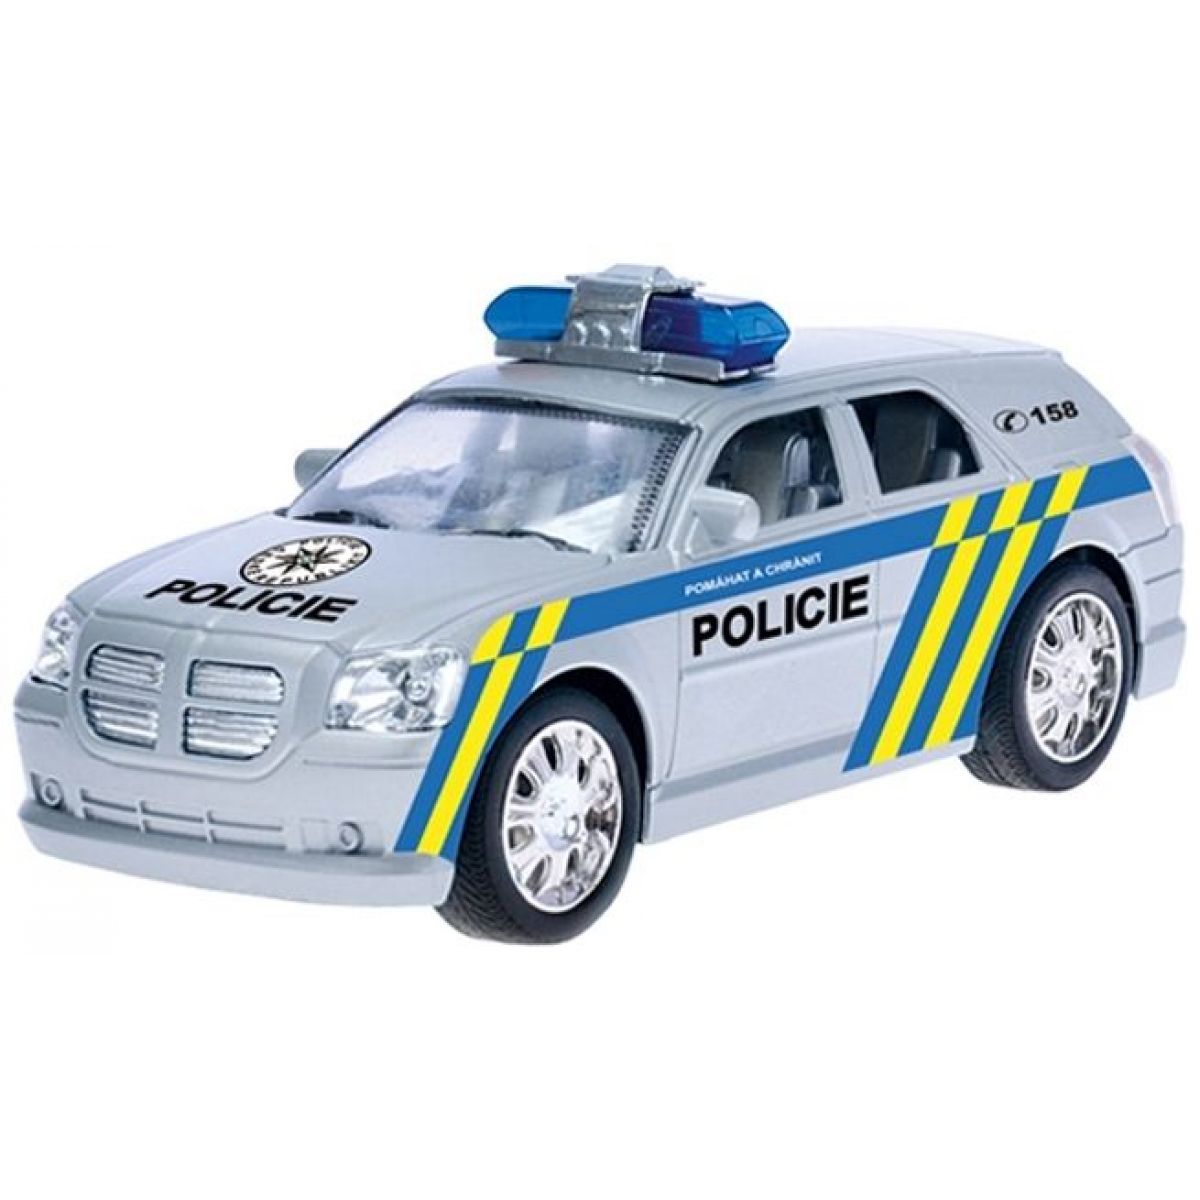 Teddies R/C Auto policie